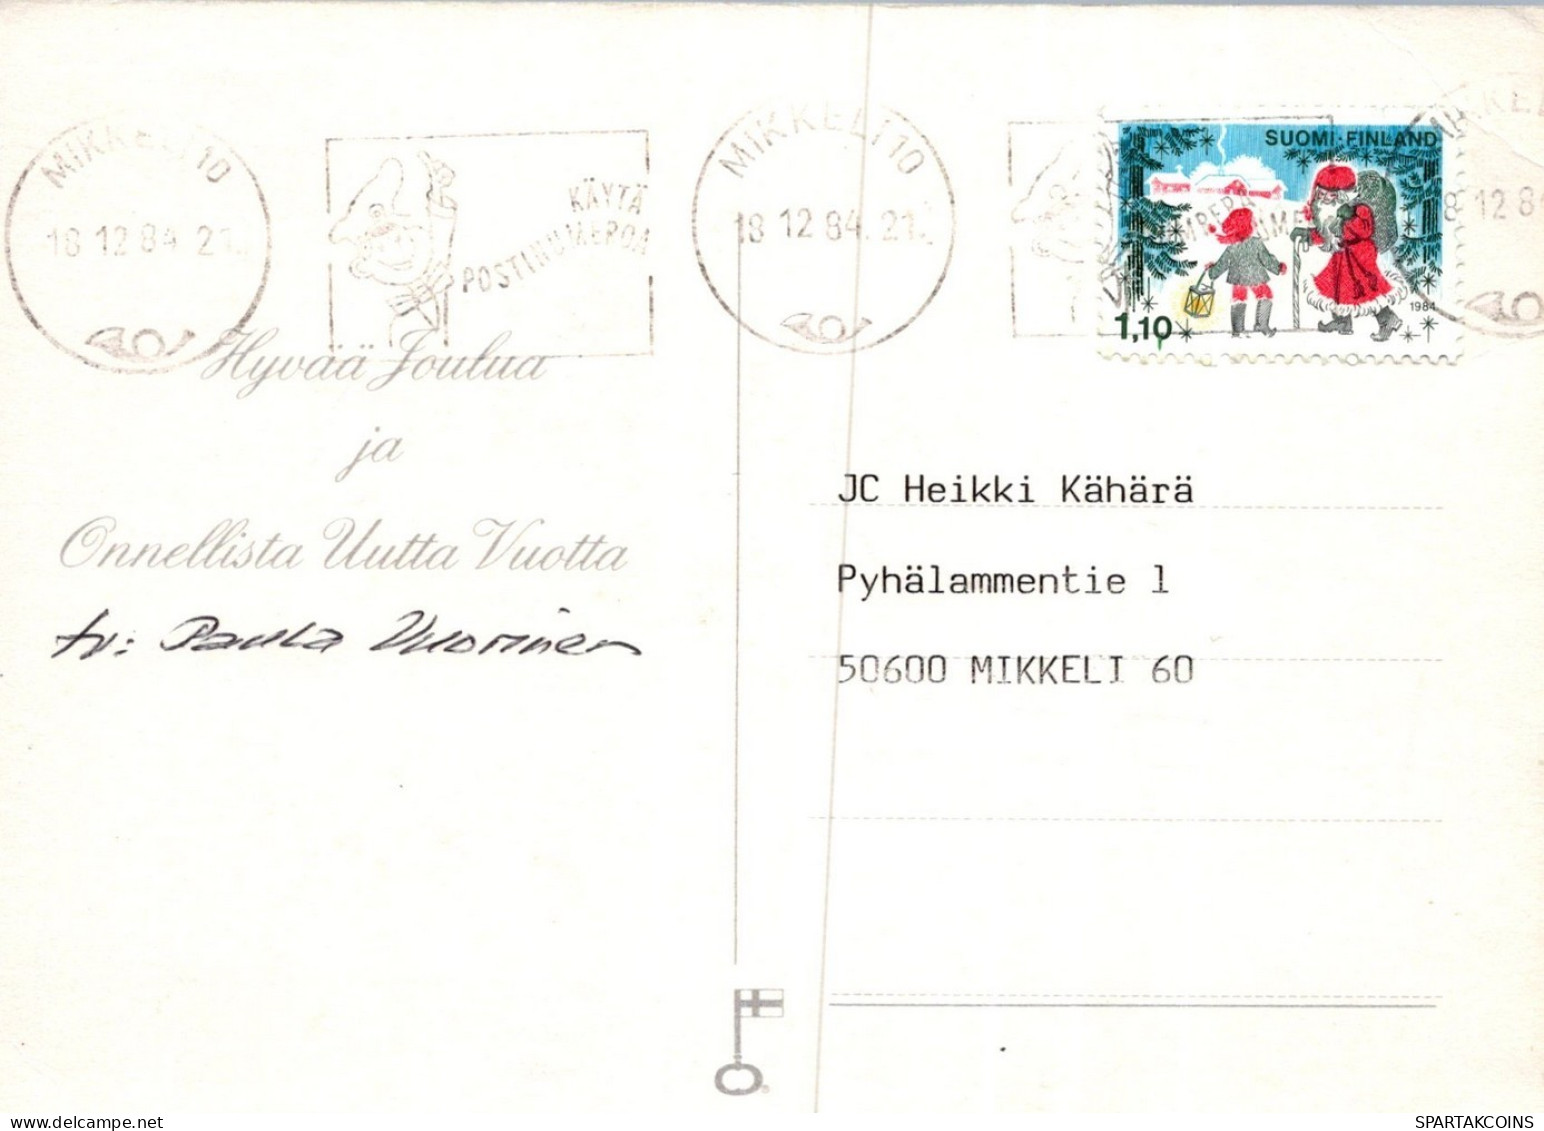 BABBO NATALE Natale Vintage Cartolina CPSM #PAK762.A - Santa Claus